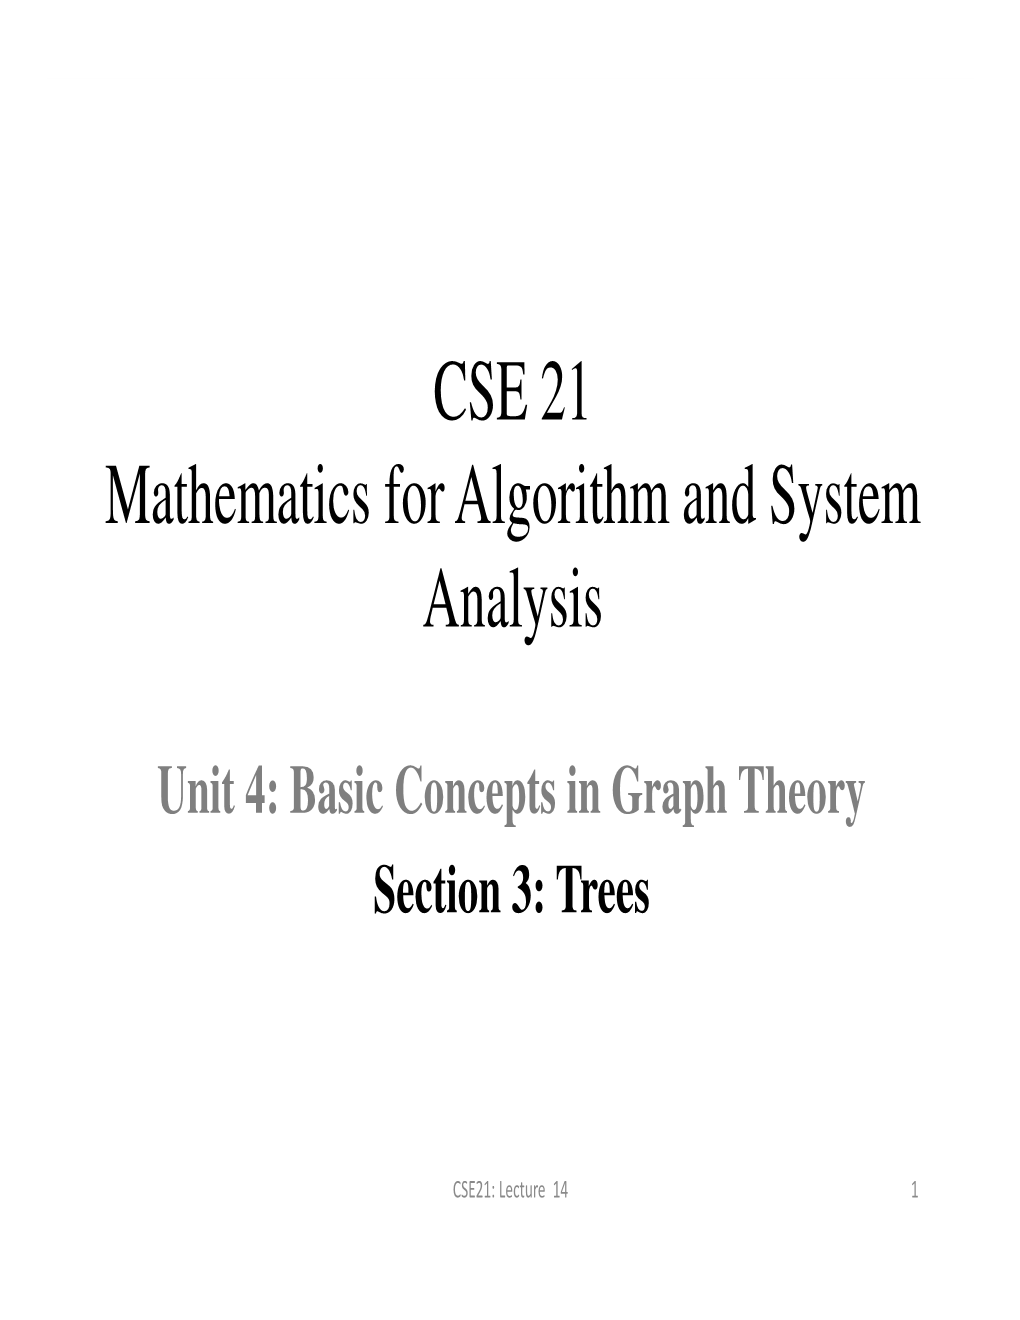 CSE 21 Mathematics for Algorithm and System Analysis